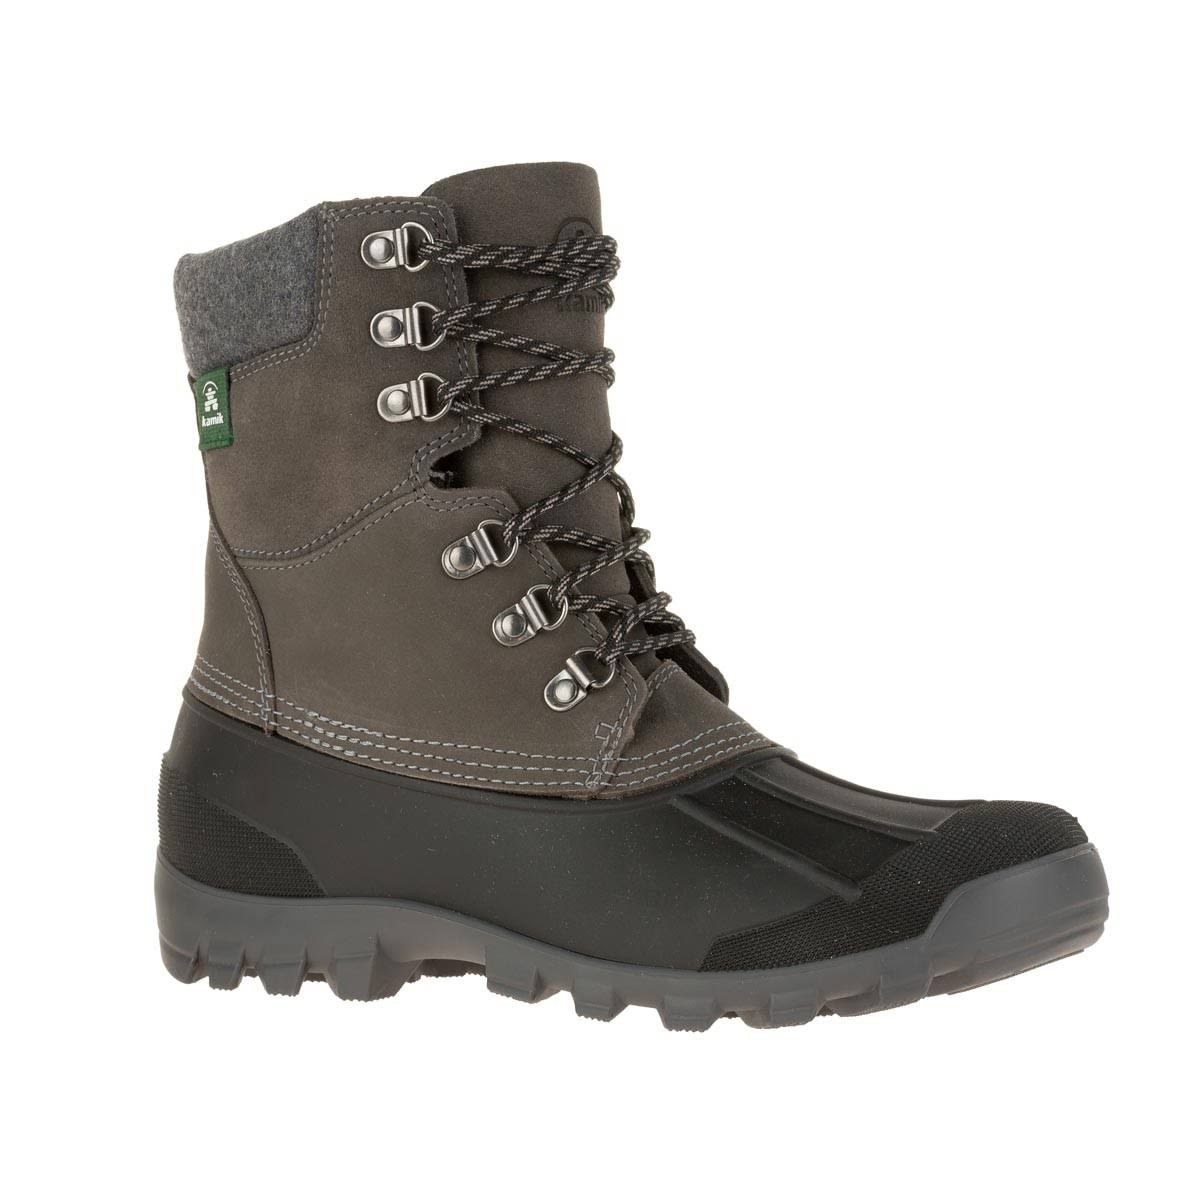 Kamik Hudson5 Thinsulate Waterproof Winter Boots for Men, UK 11, Charcoal